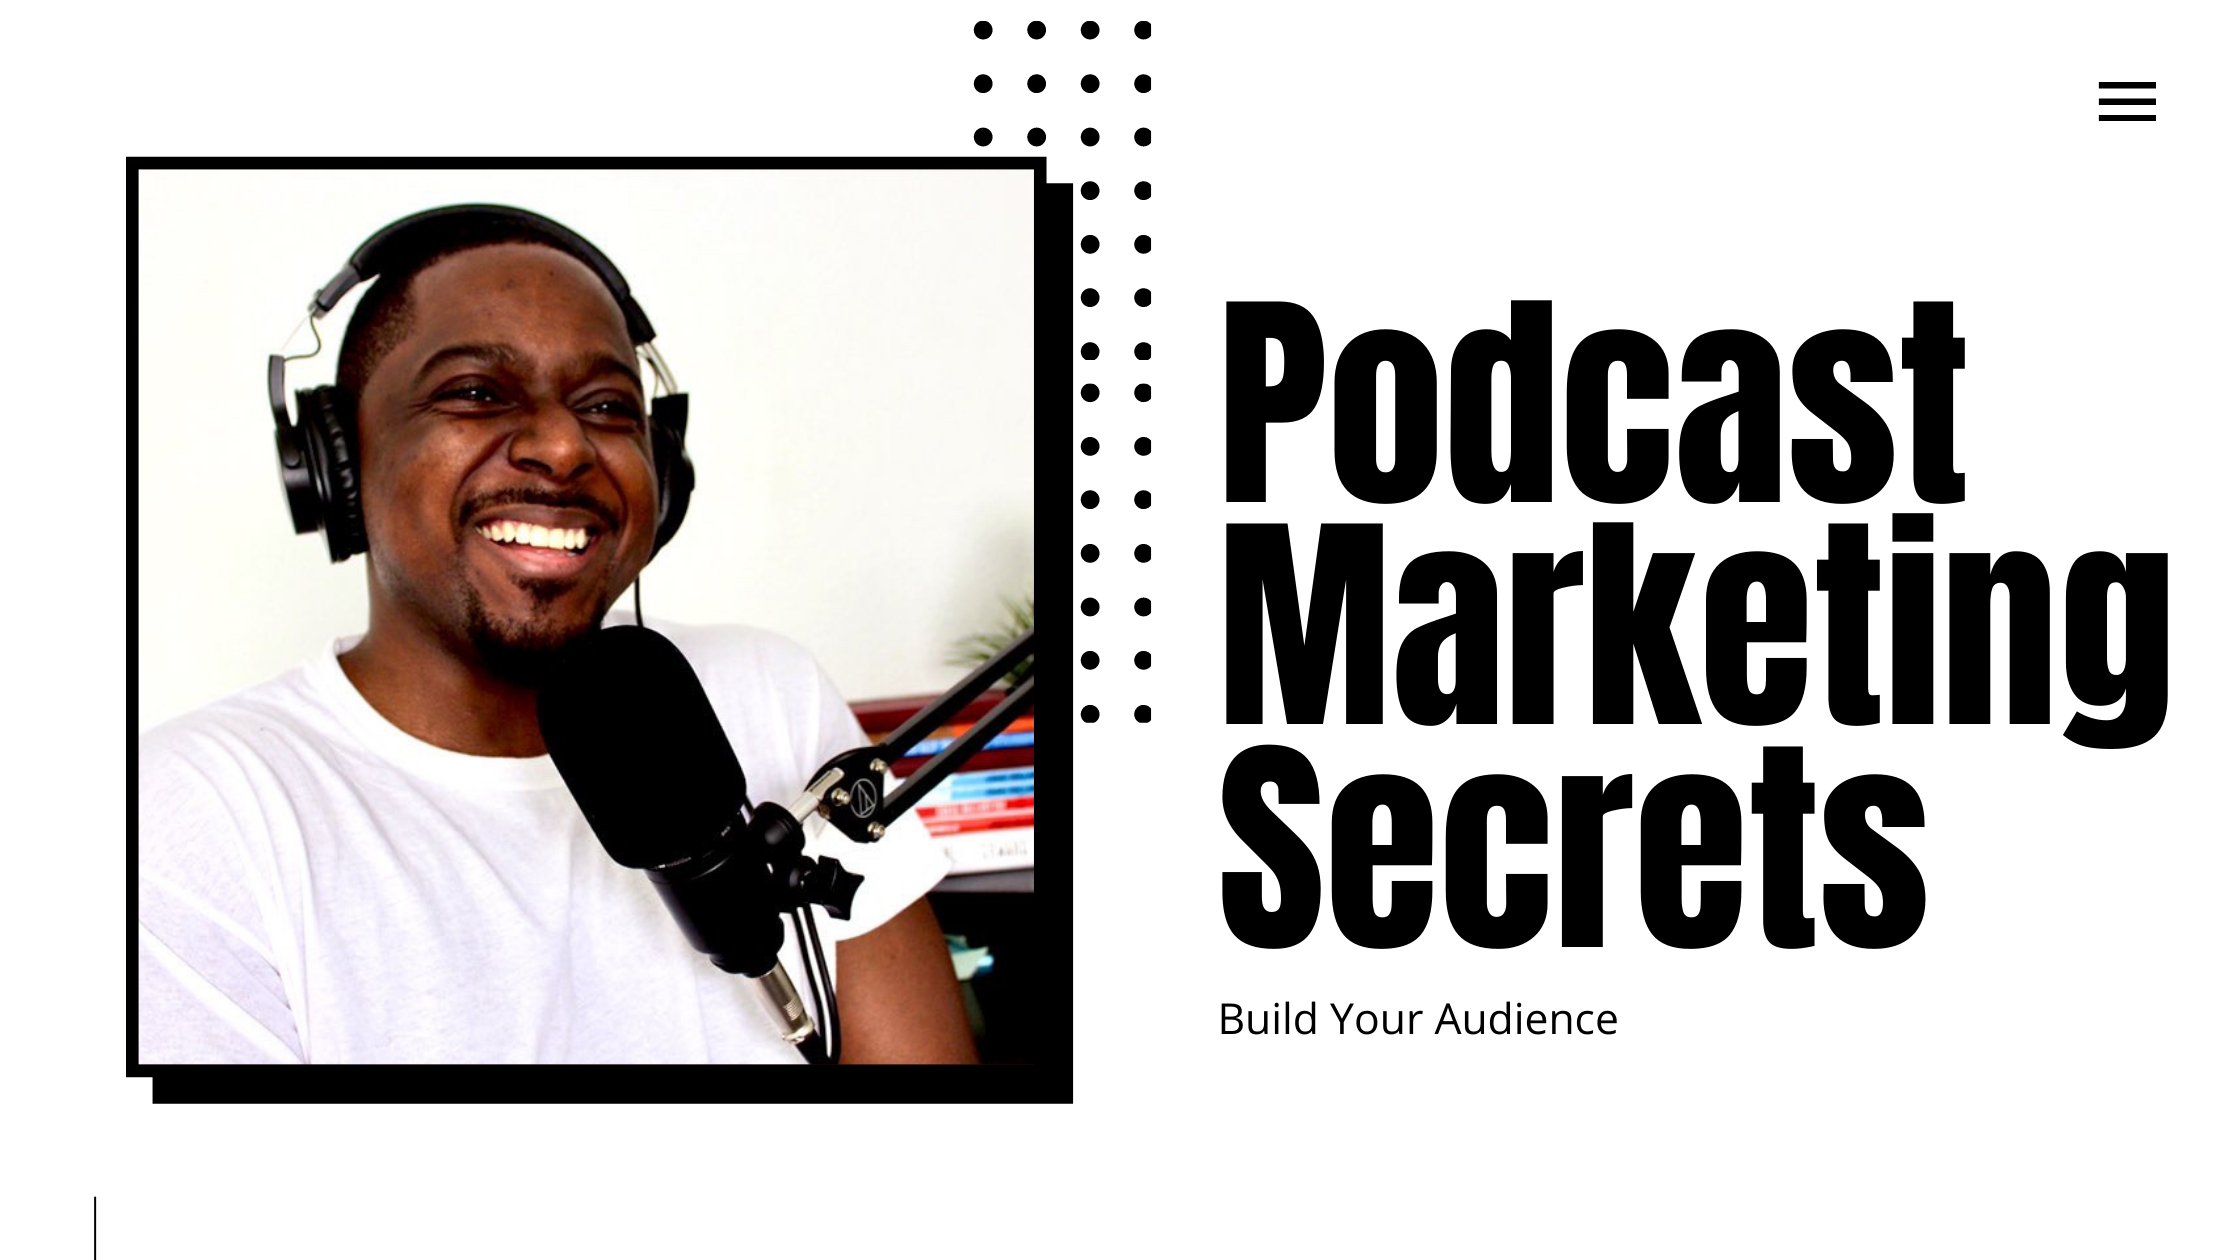 Podcast Marketing Secrets